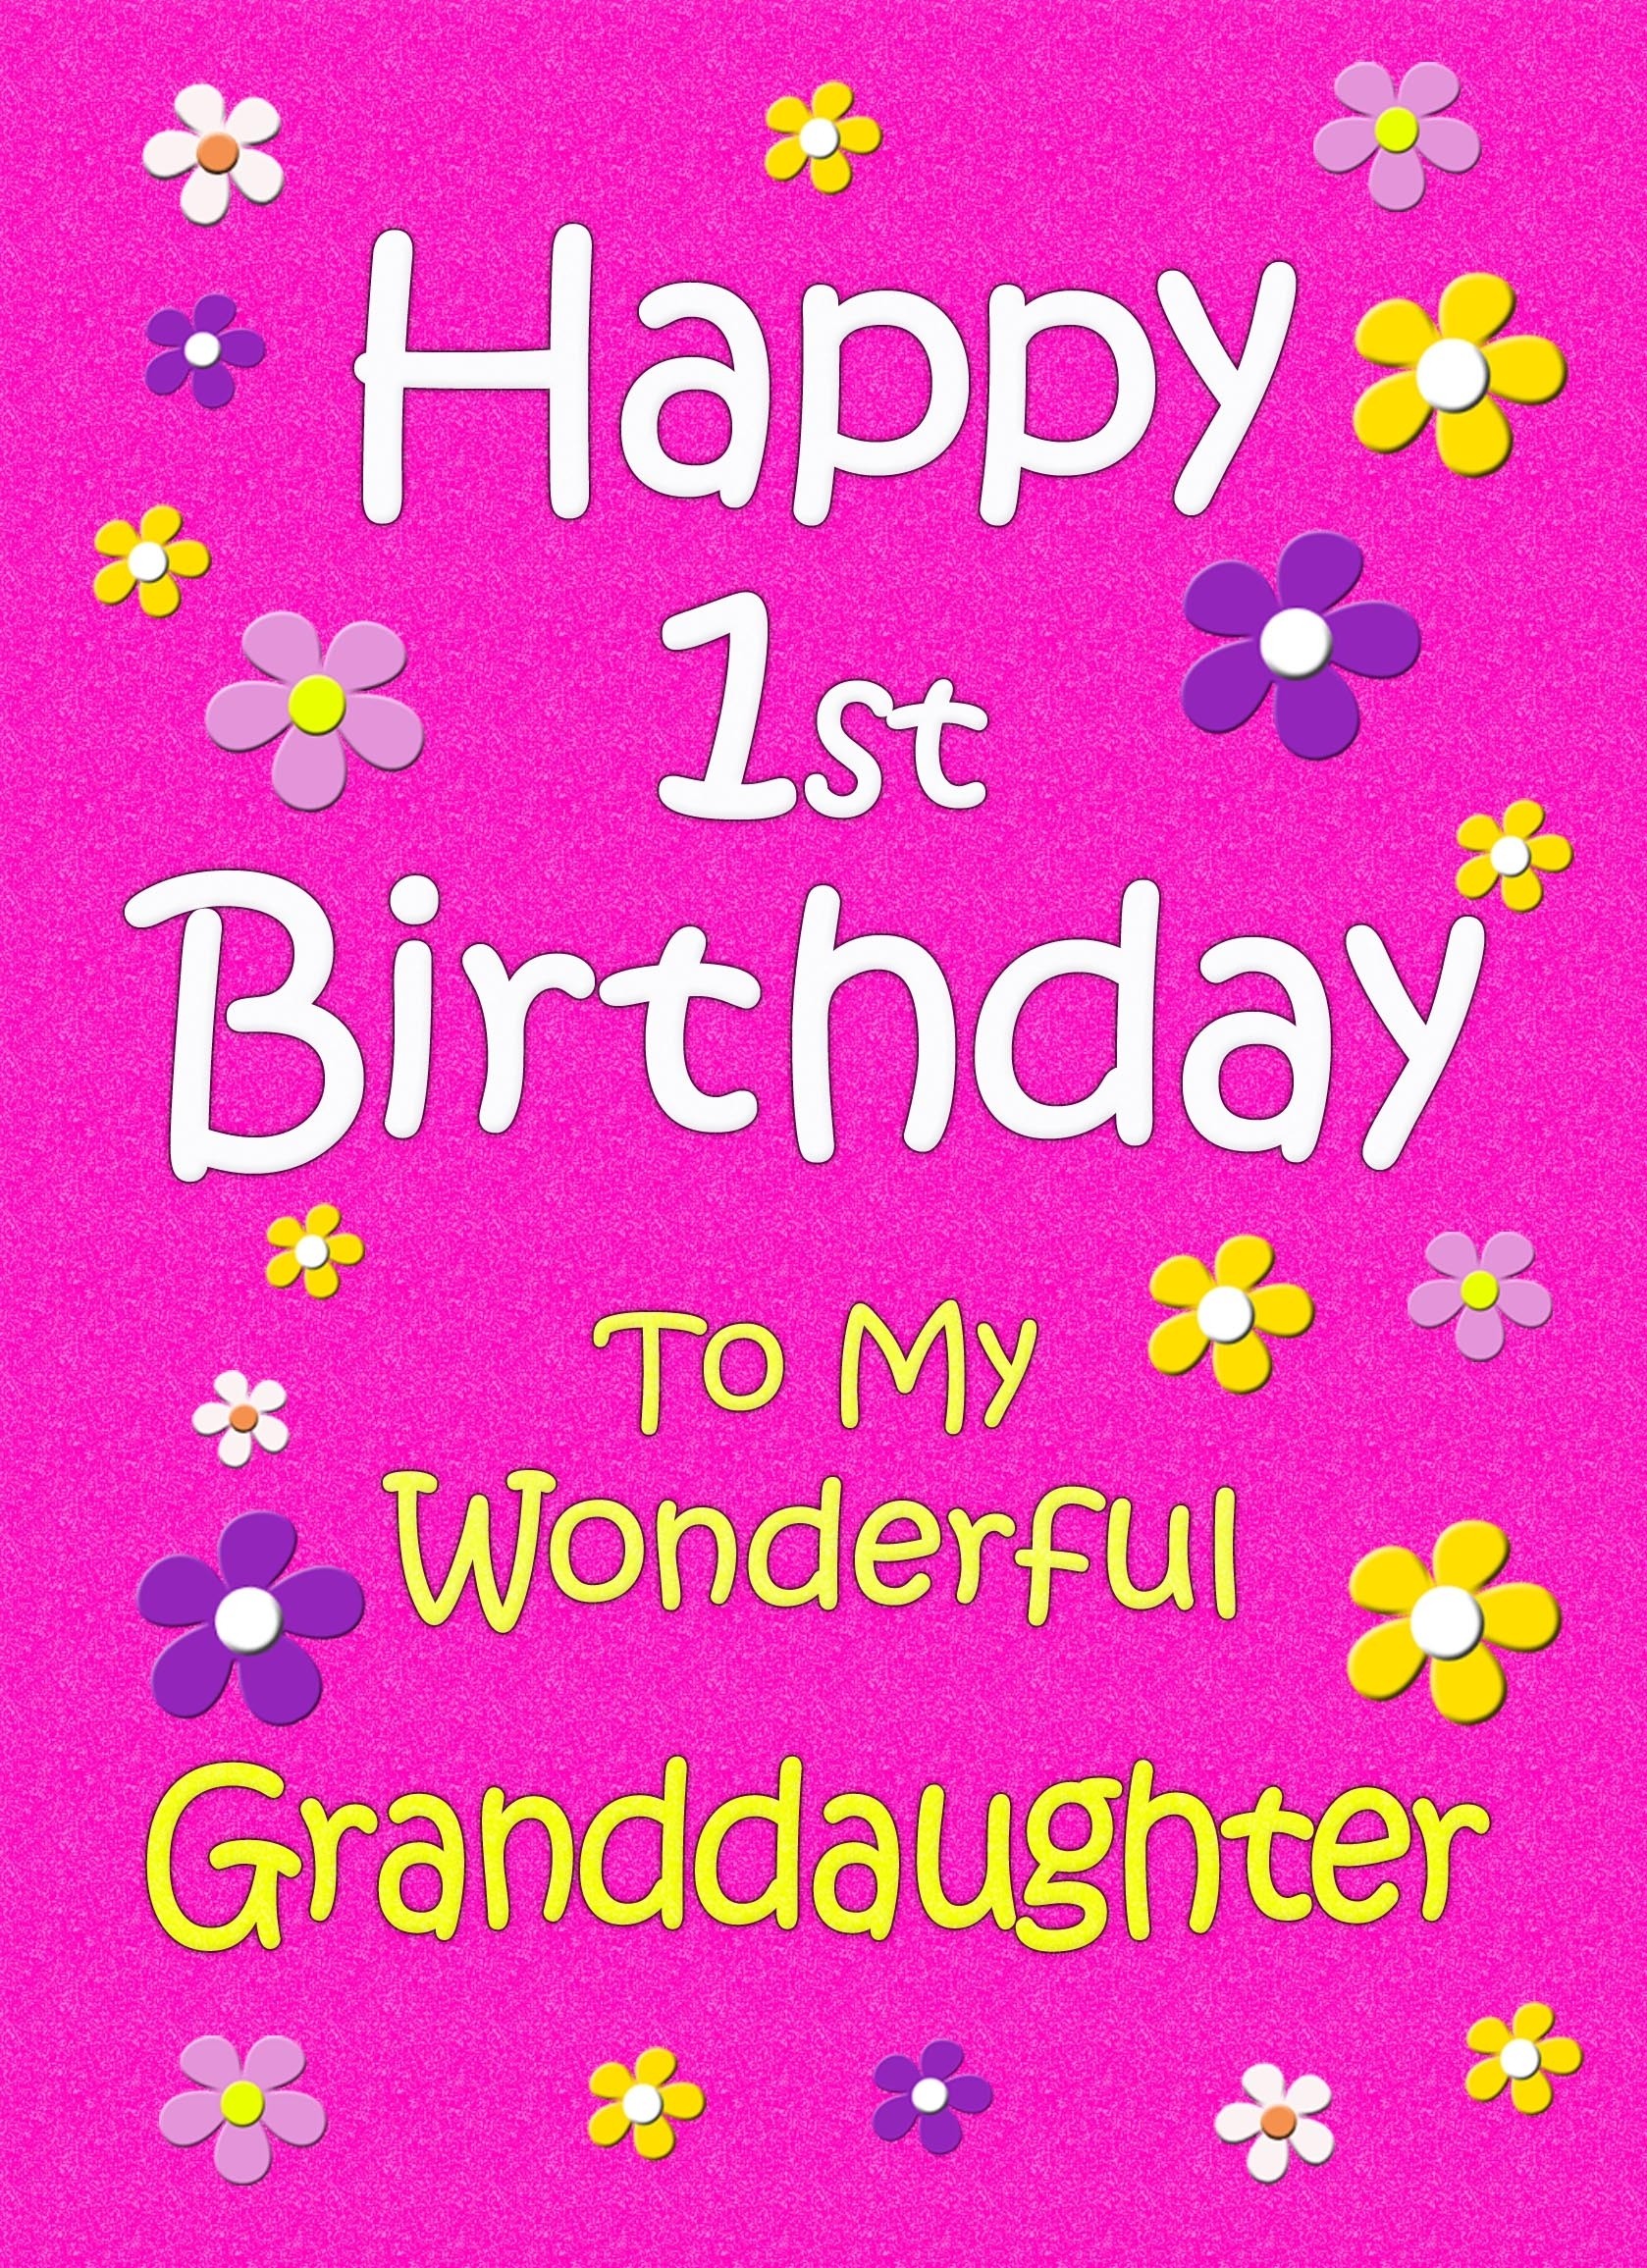 Granddaughter 1st Birthday Card (Pink)